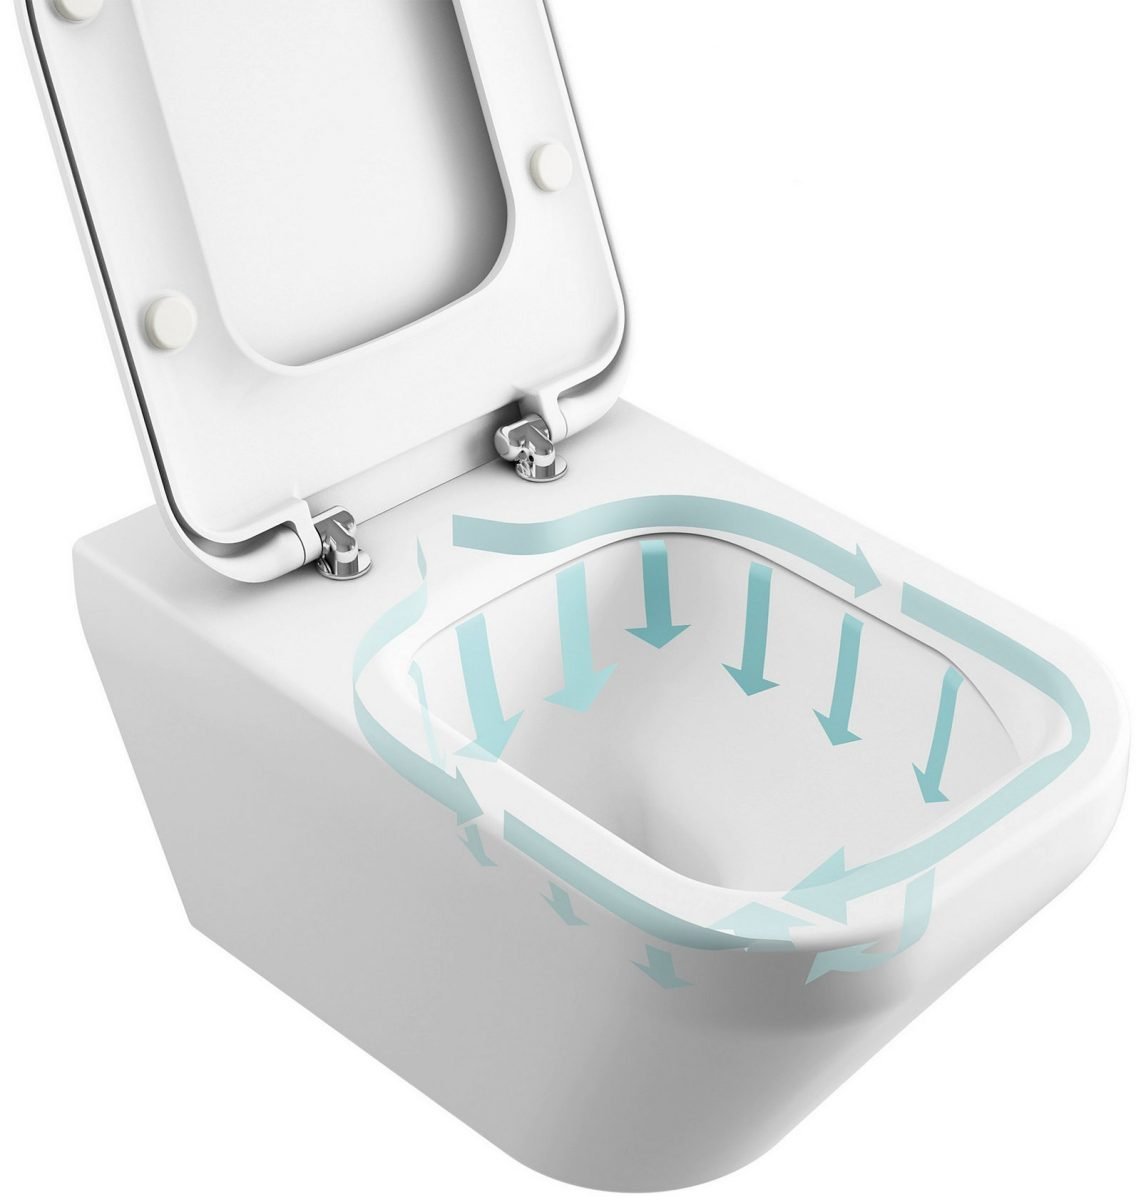 Vaso WC sospeso Enema con sedile softclose Sanitari Bagno